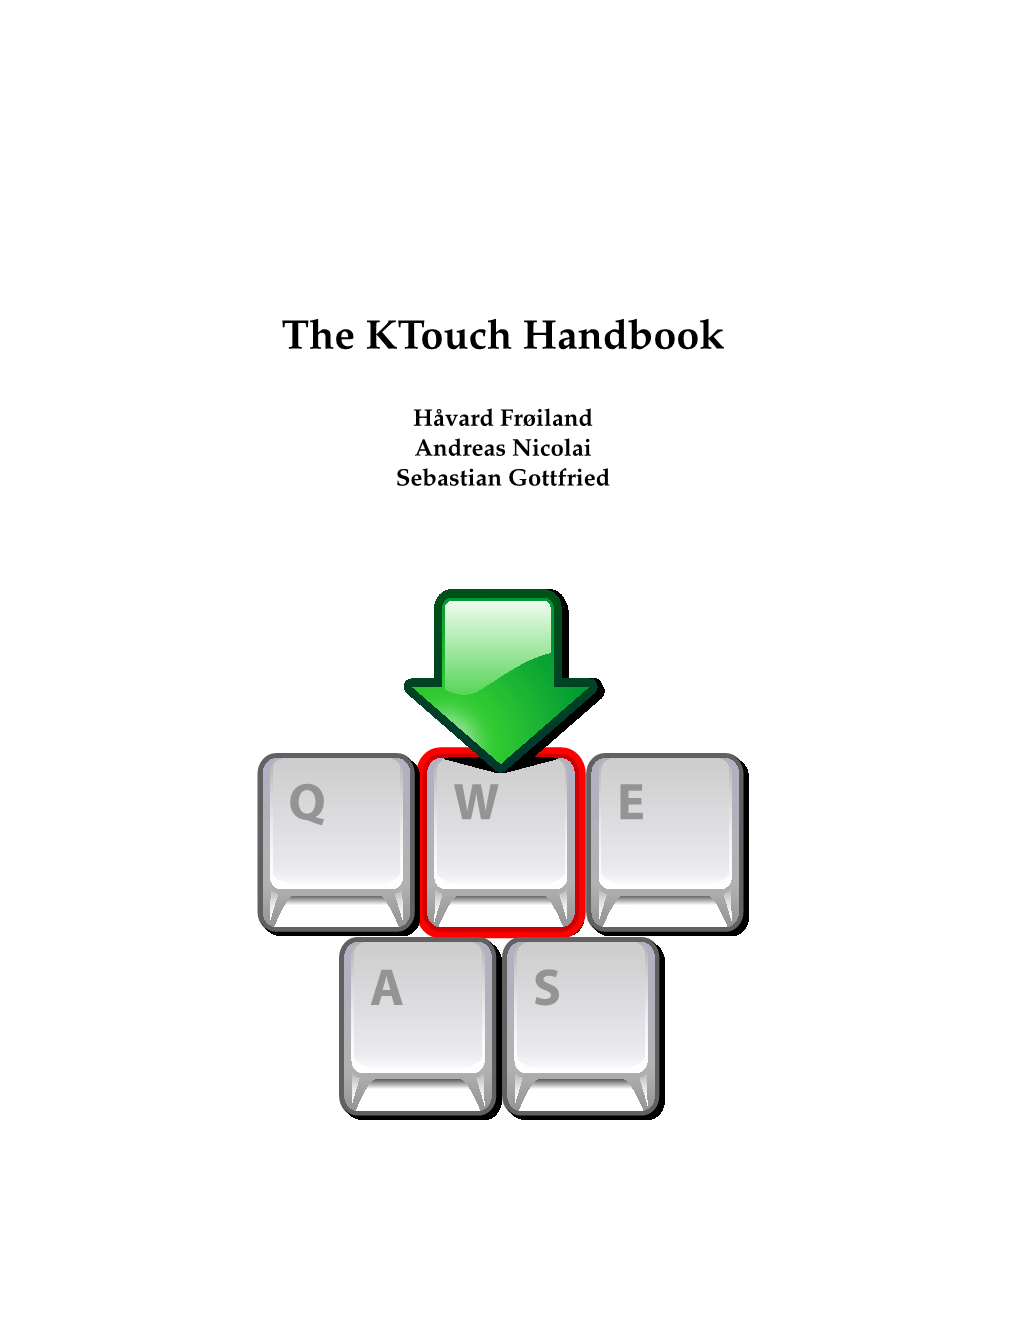 The Ktouch Handbook